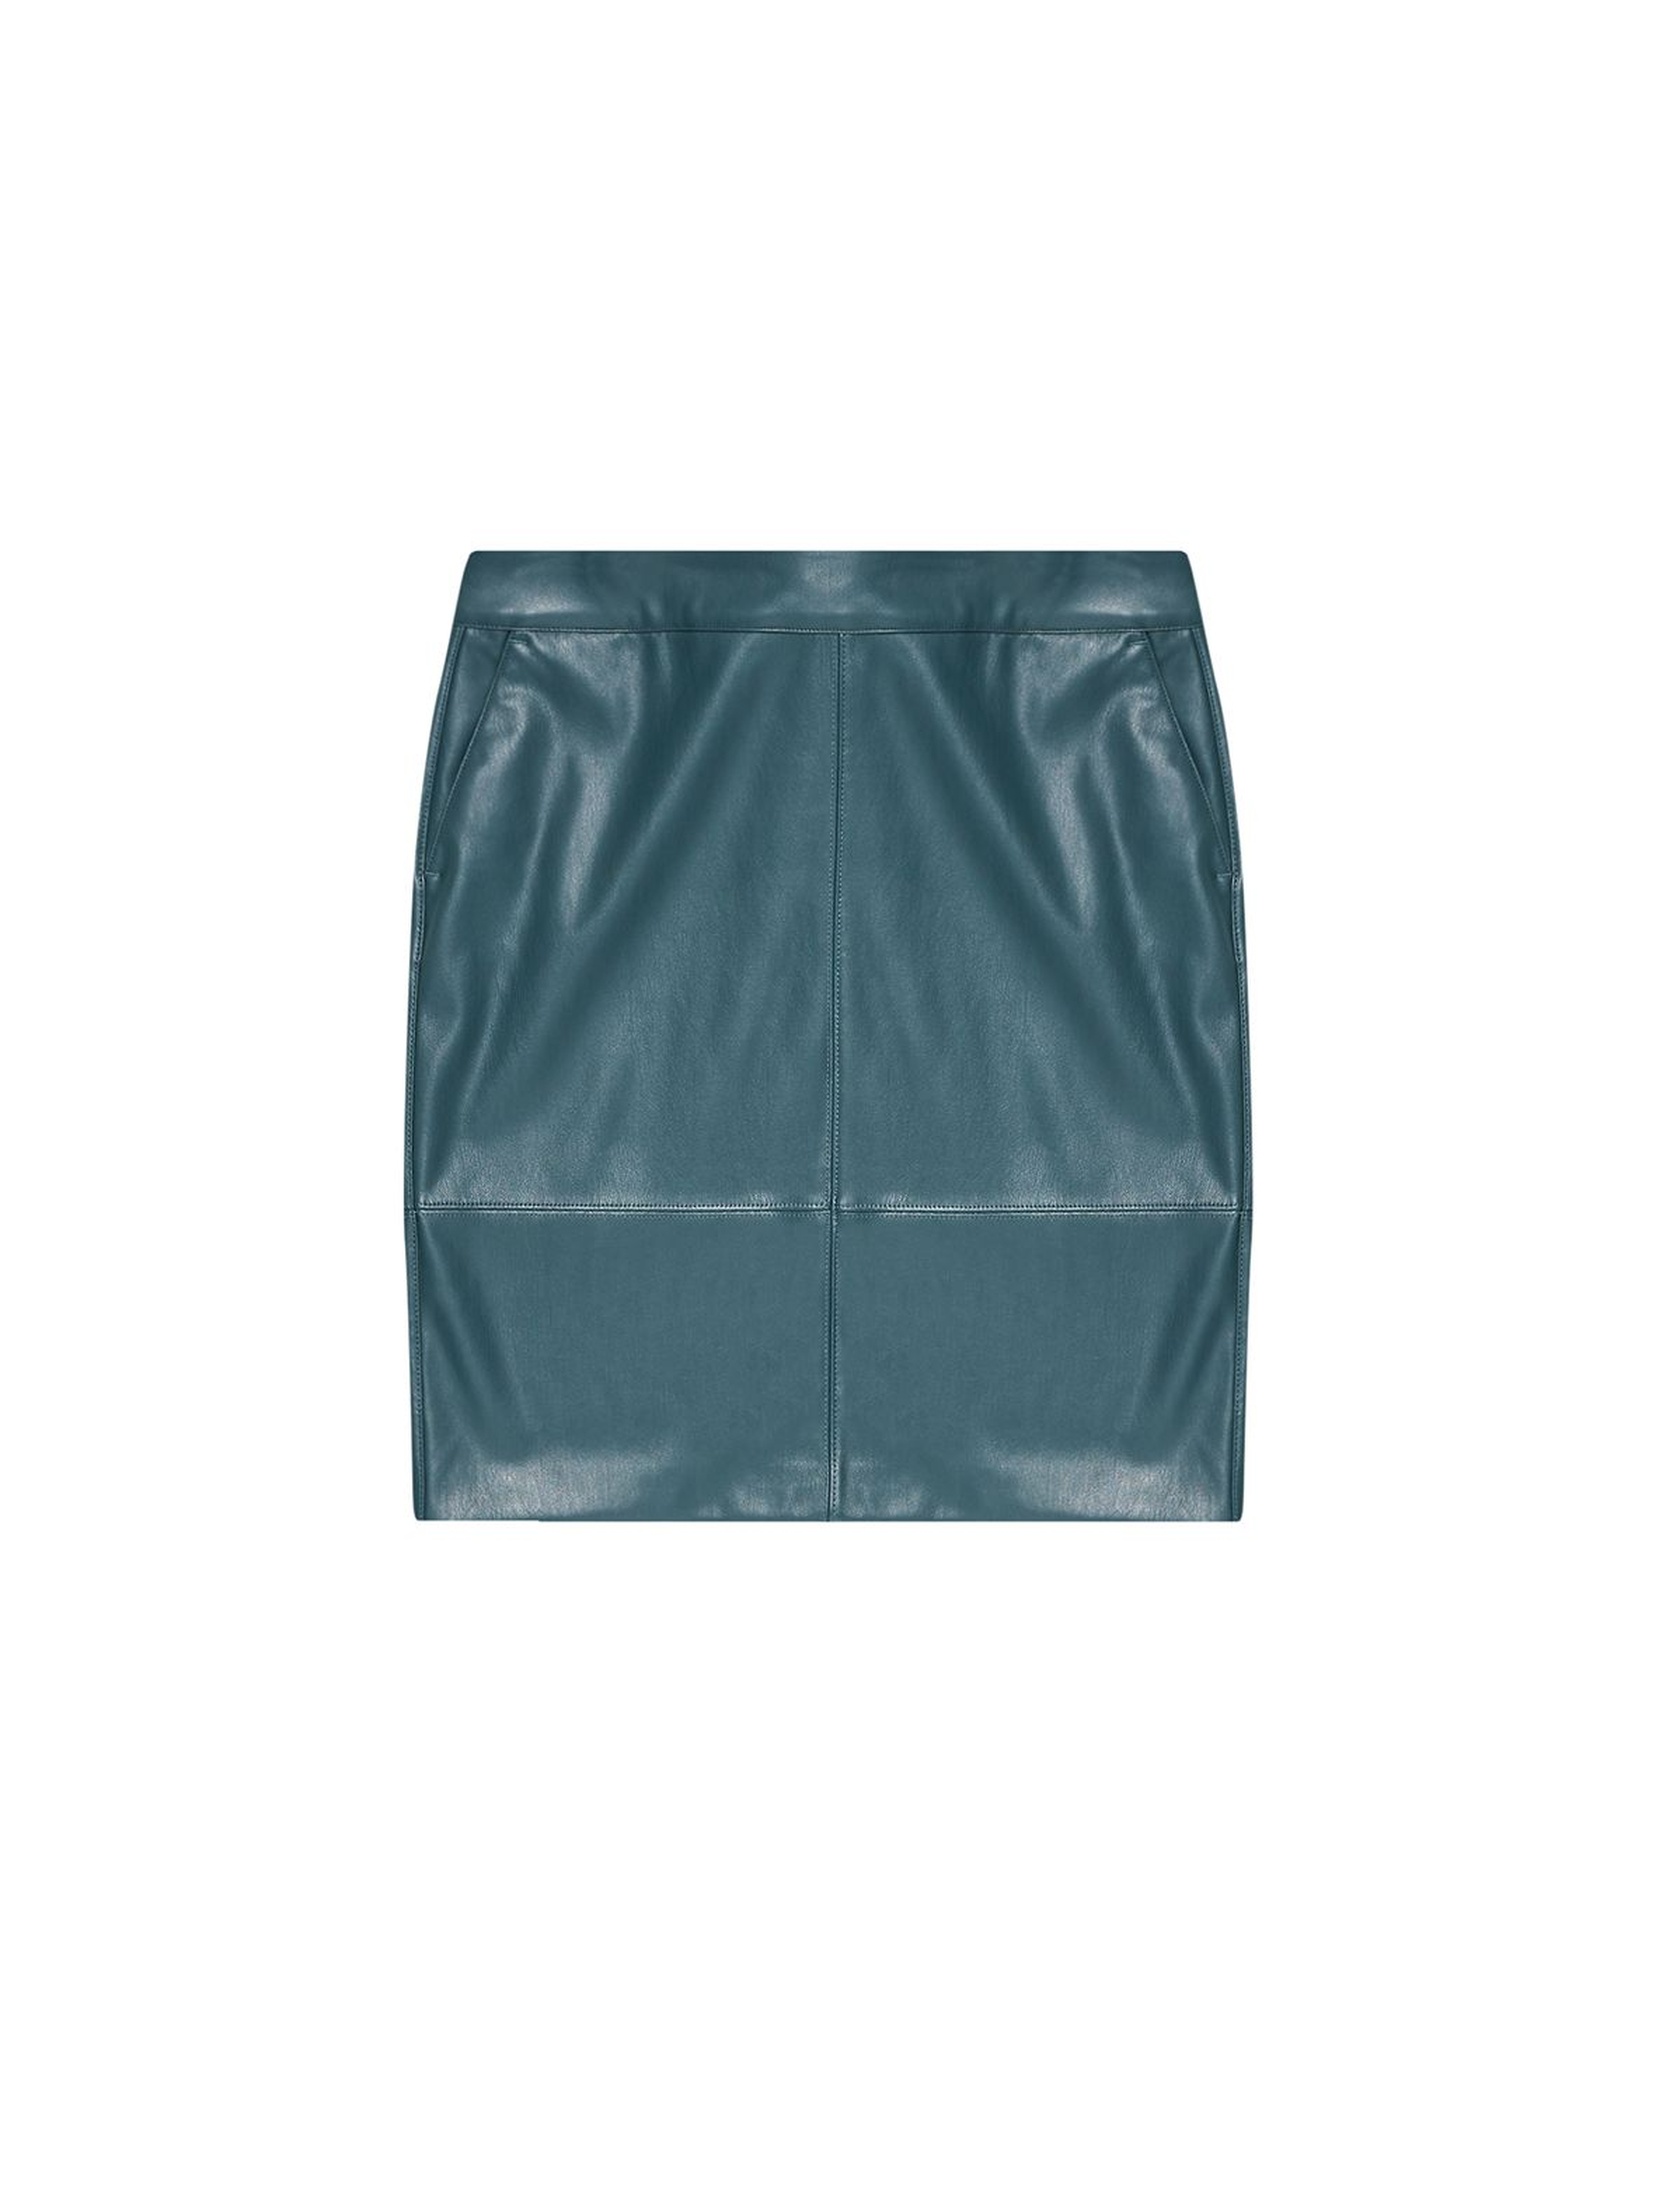 Damska spódnica z imitacji skóry - zielona